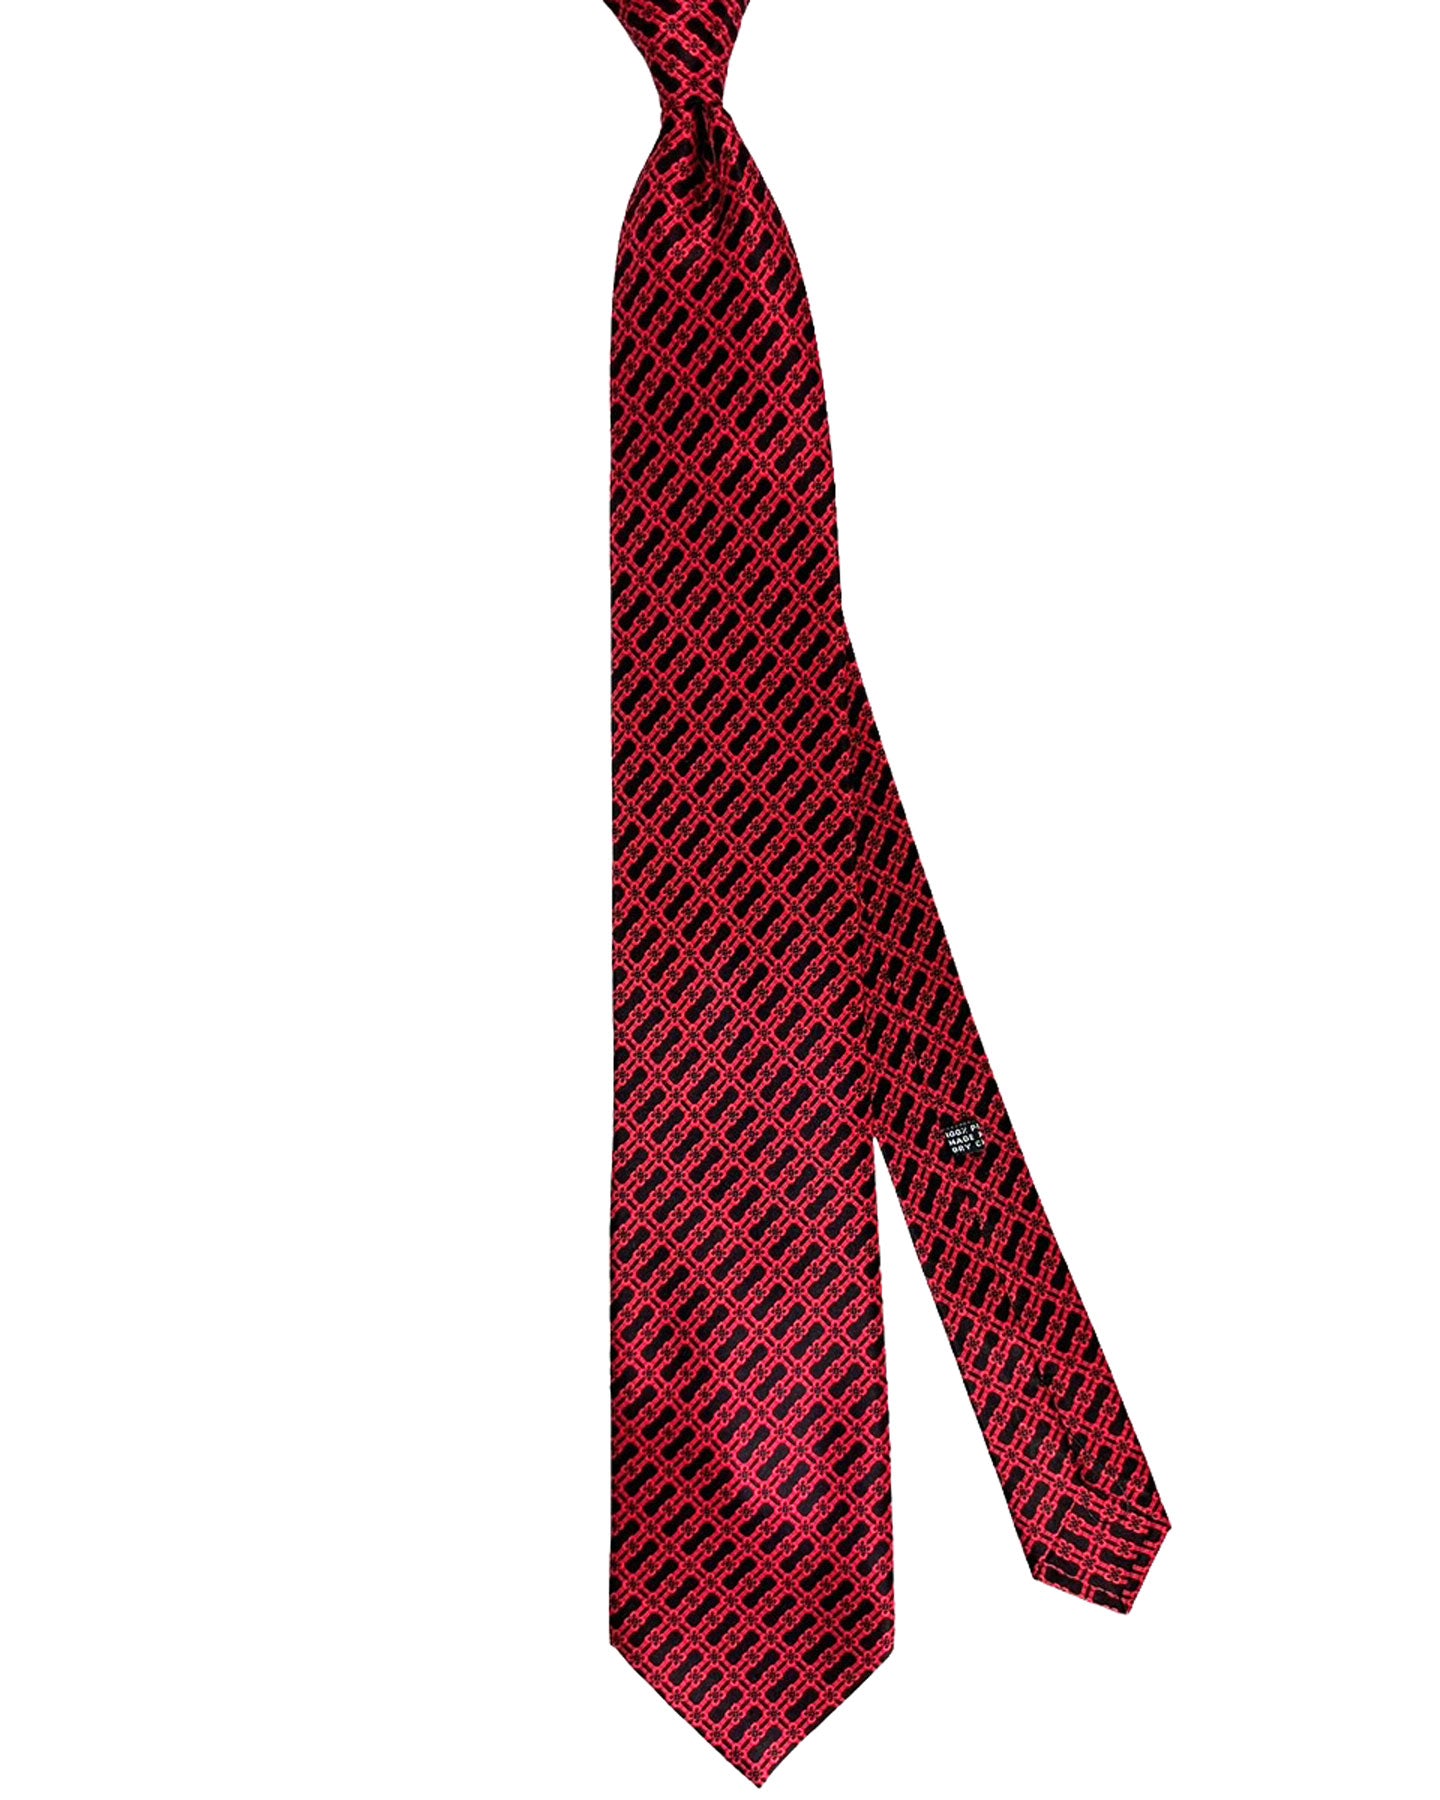 Stefano Ricci Silk Tie Black Red Geometric Design